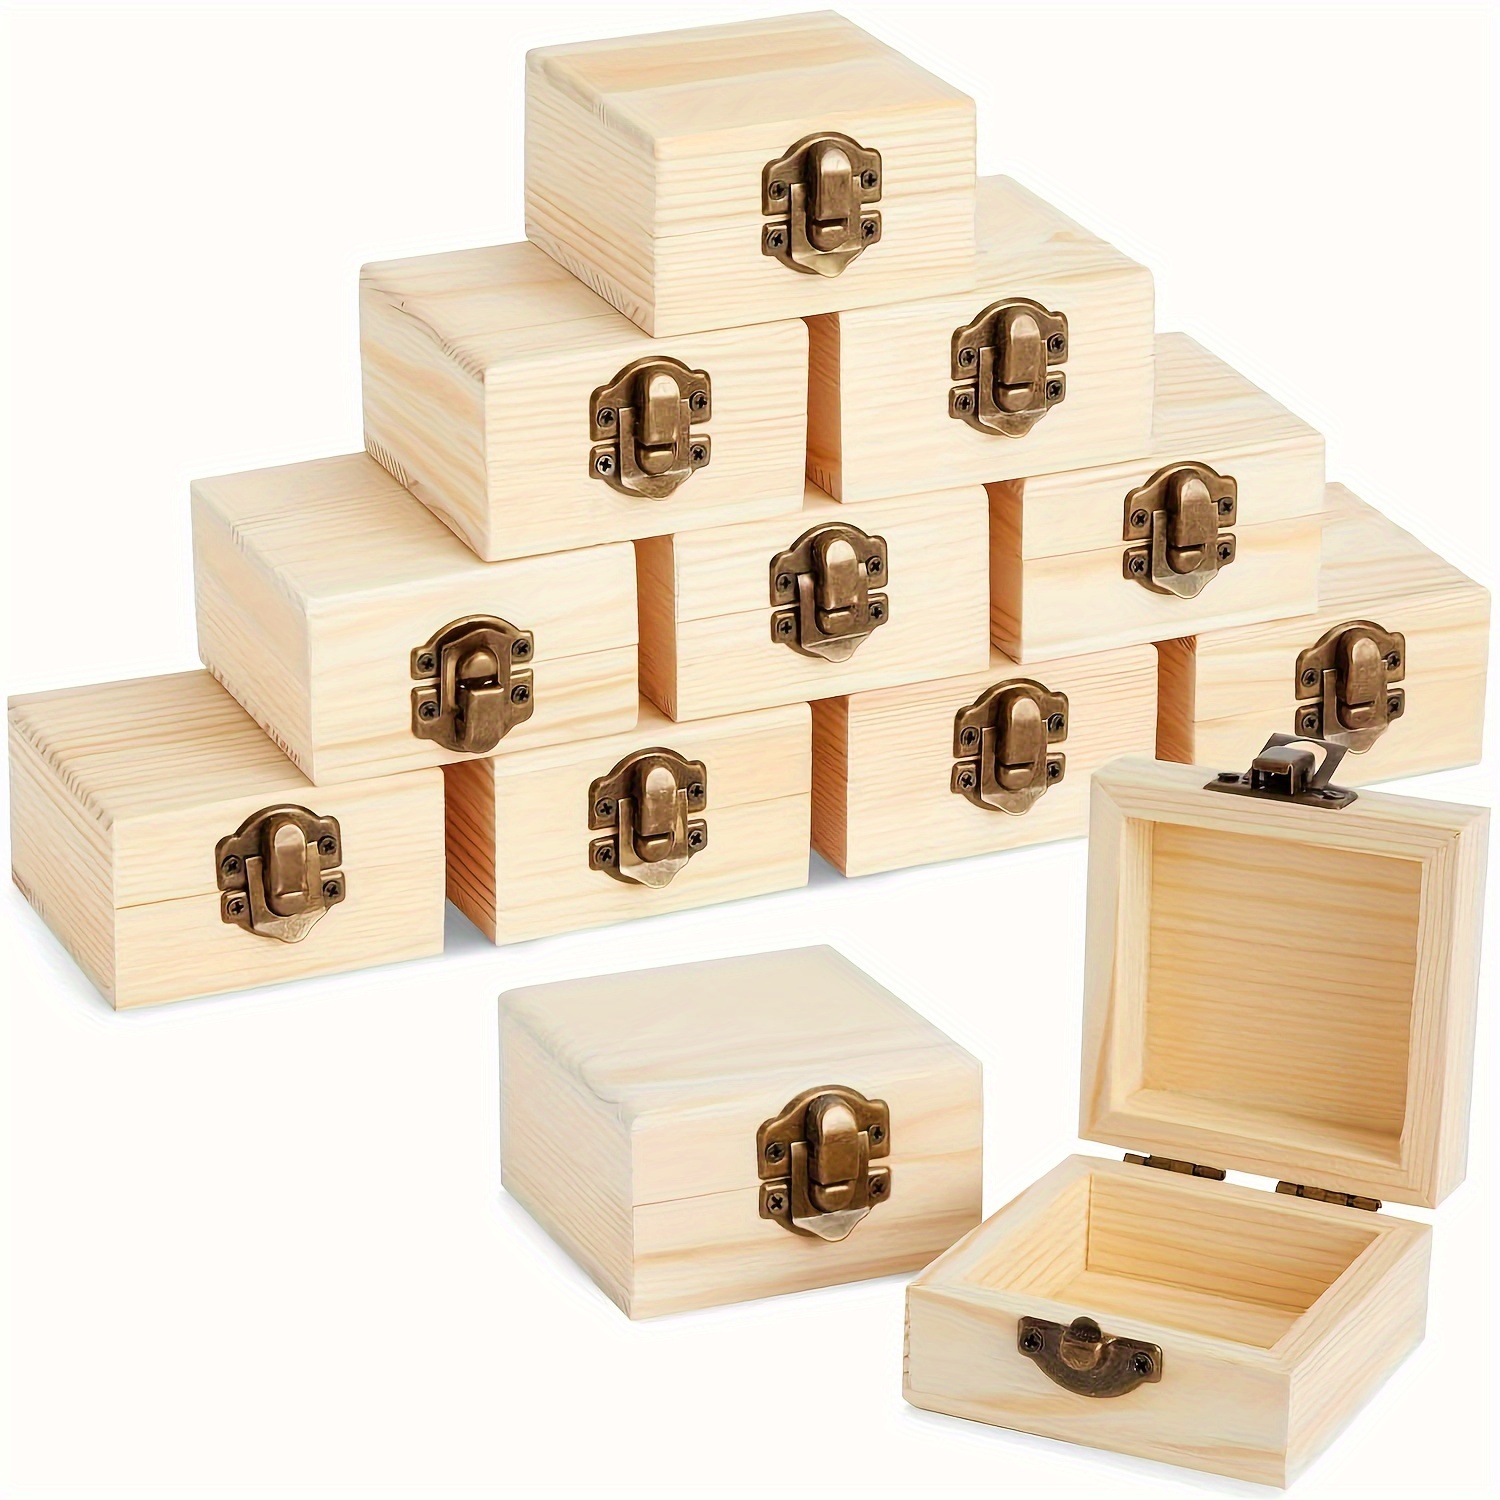  Thyle 12 cajas de madera sin terminar, 6.3 x 4.9 x 1.8  pulgadas, caja de madera pequeña con tapa, caja de madera para  manualidades, cajas de madera rectangulares pequeñas para bricolaje